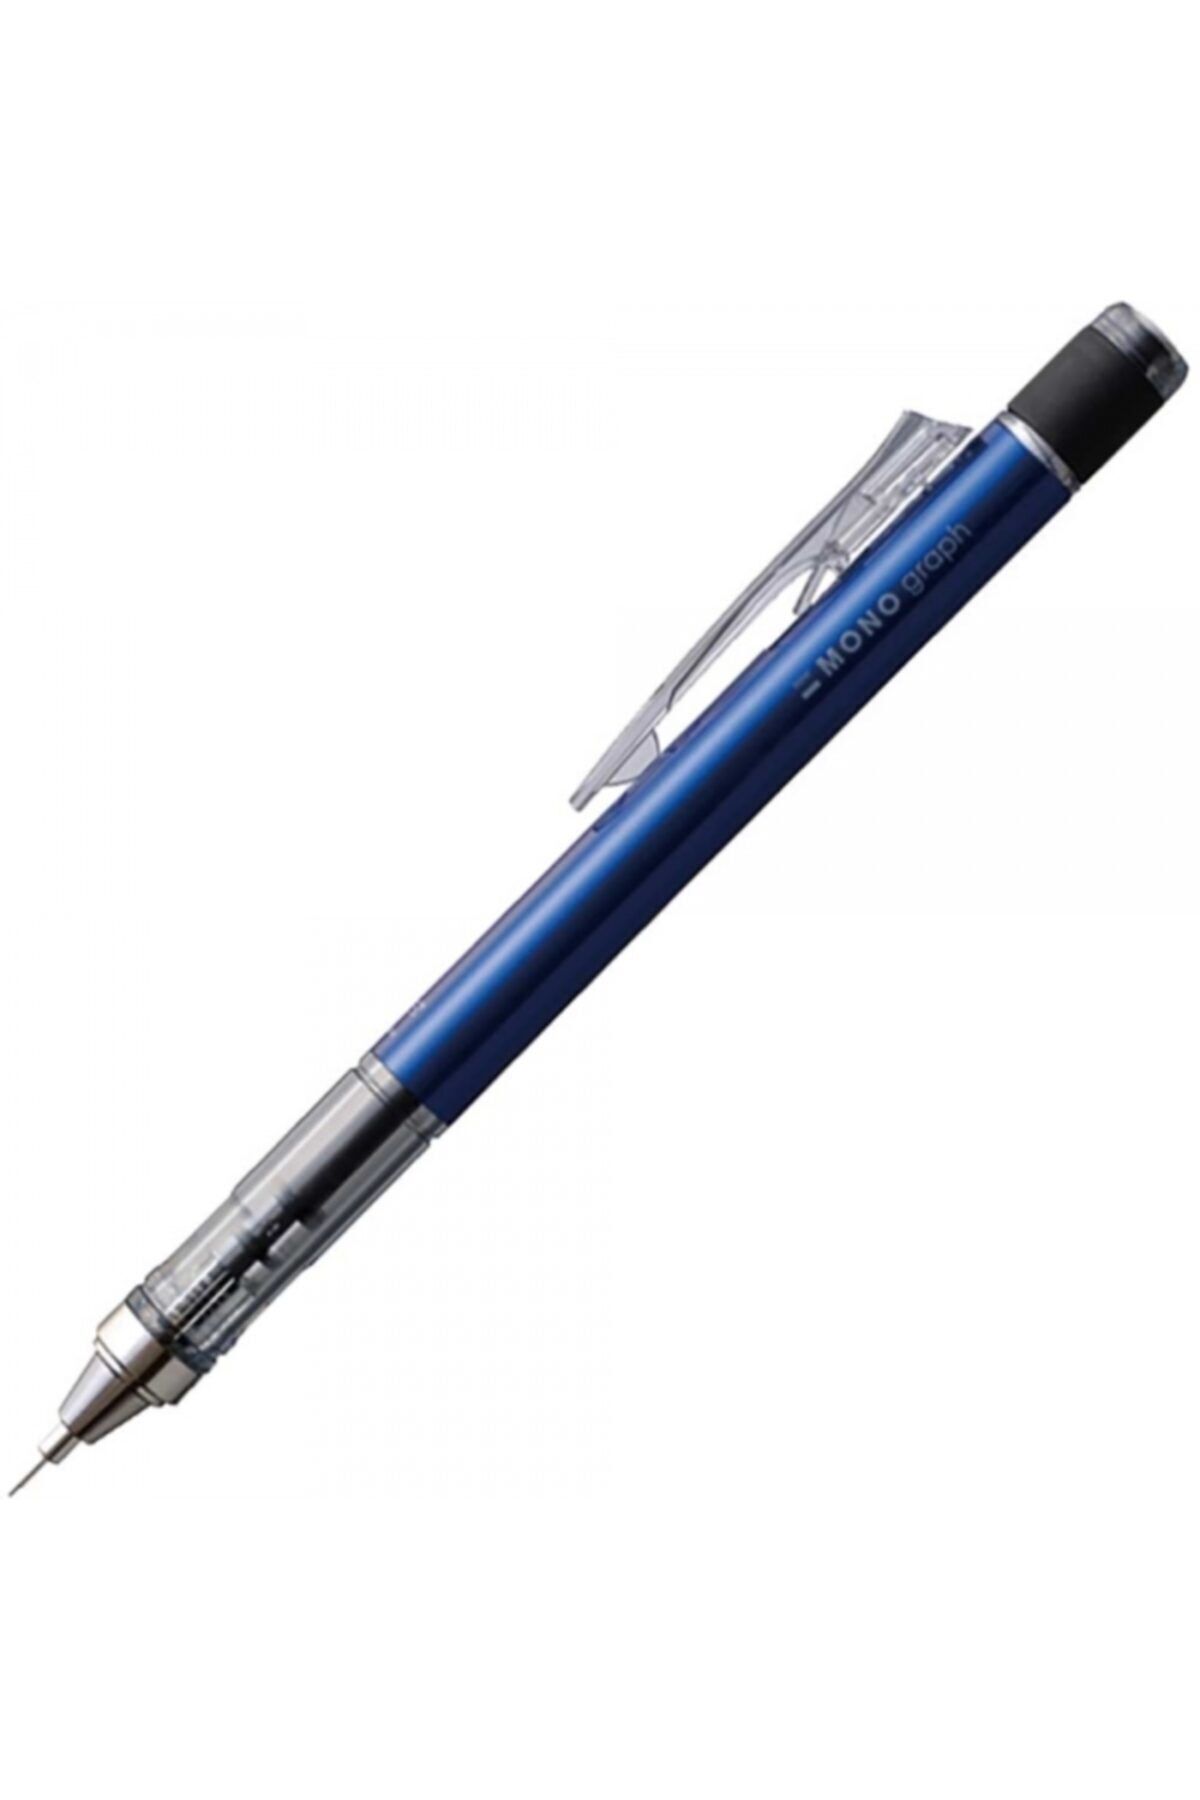 Tombow Mono Graph Mekanik Kurşun Kalem 0.3mm Mavi